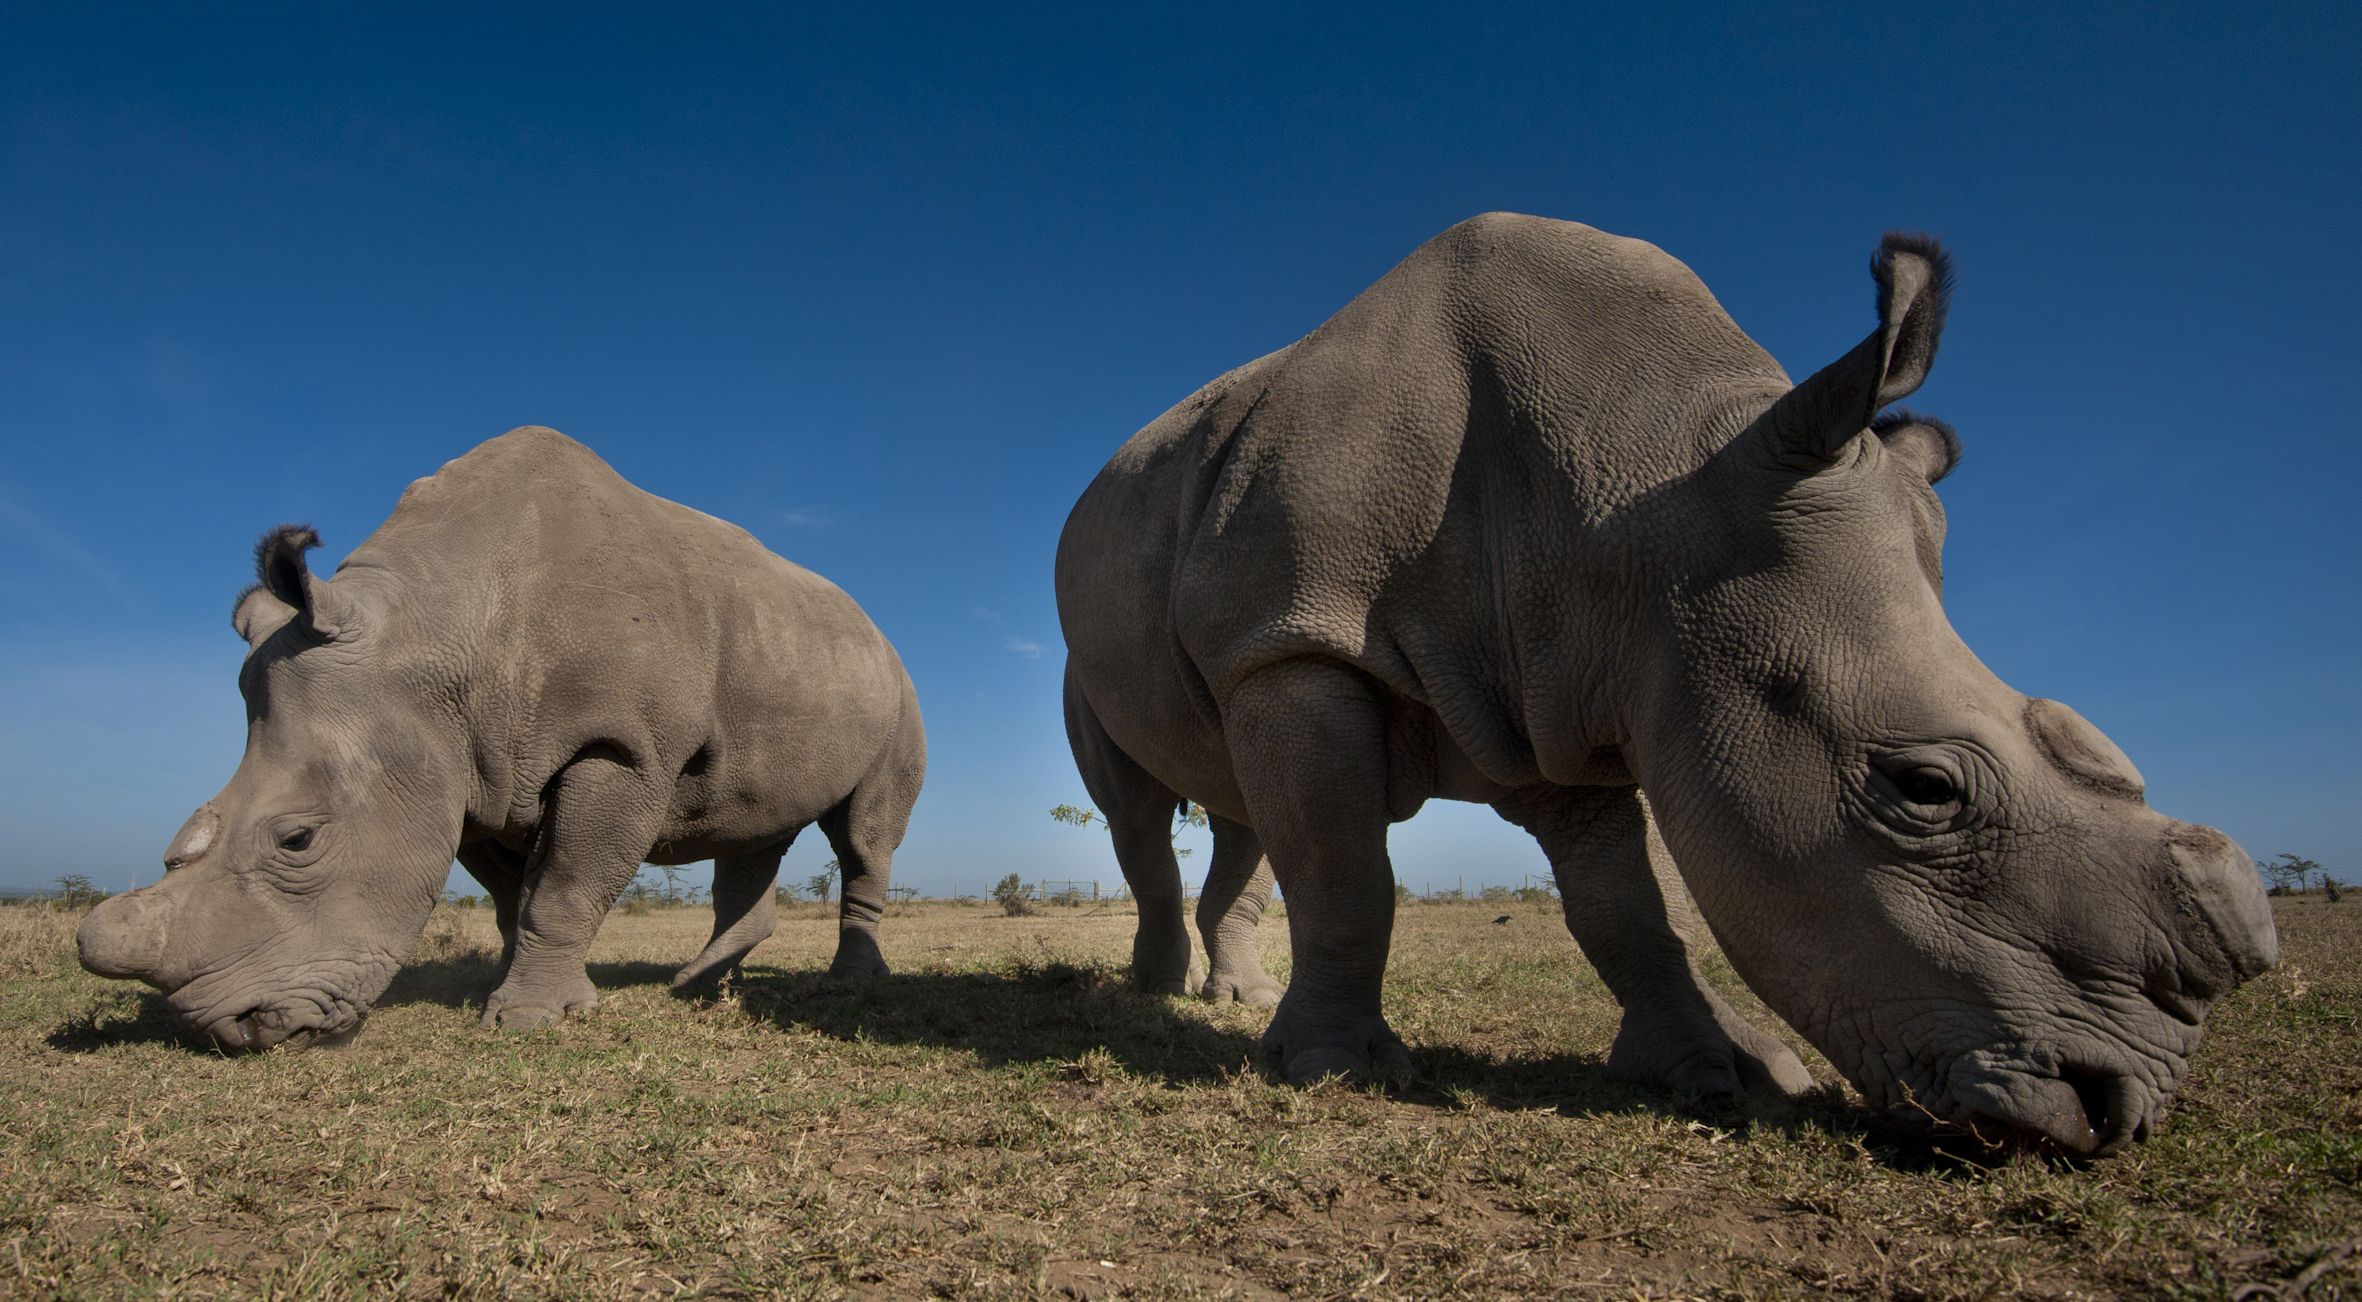 The rhinos of Ol Pejeta Conservancy